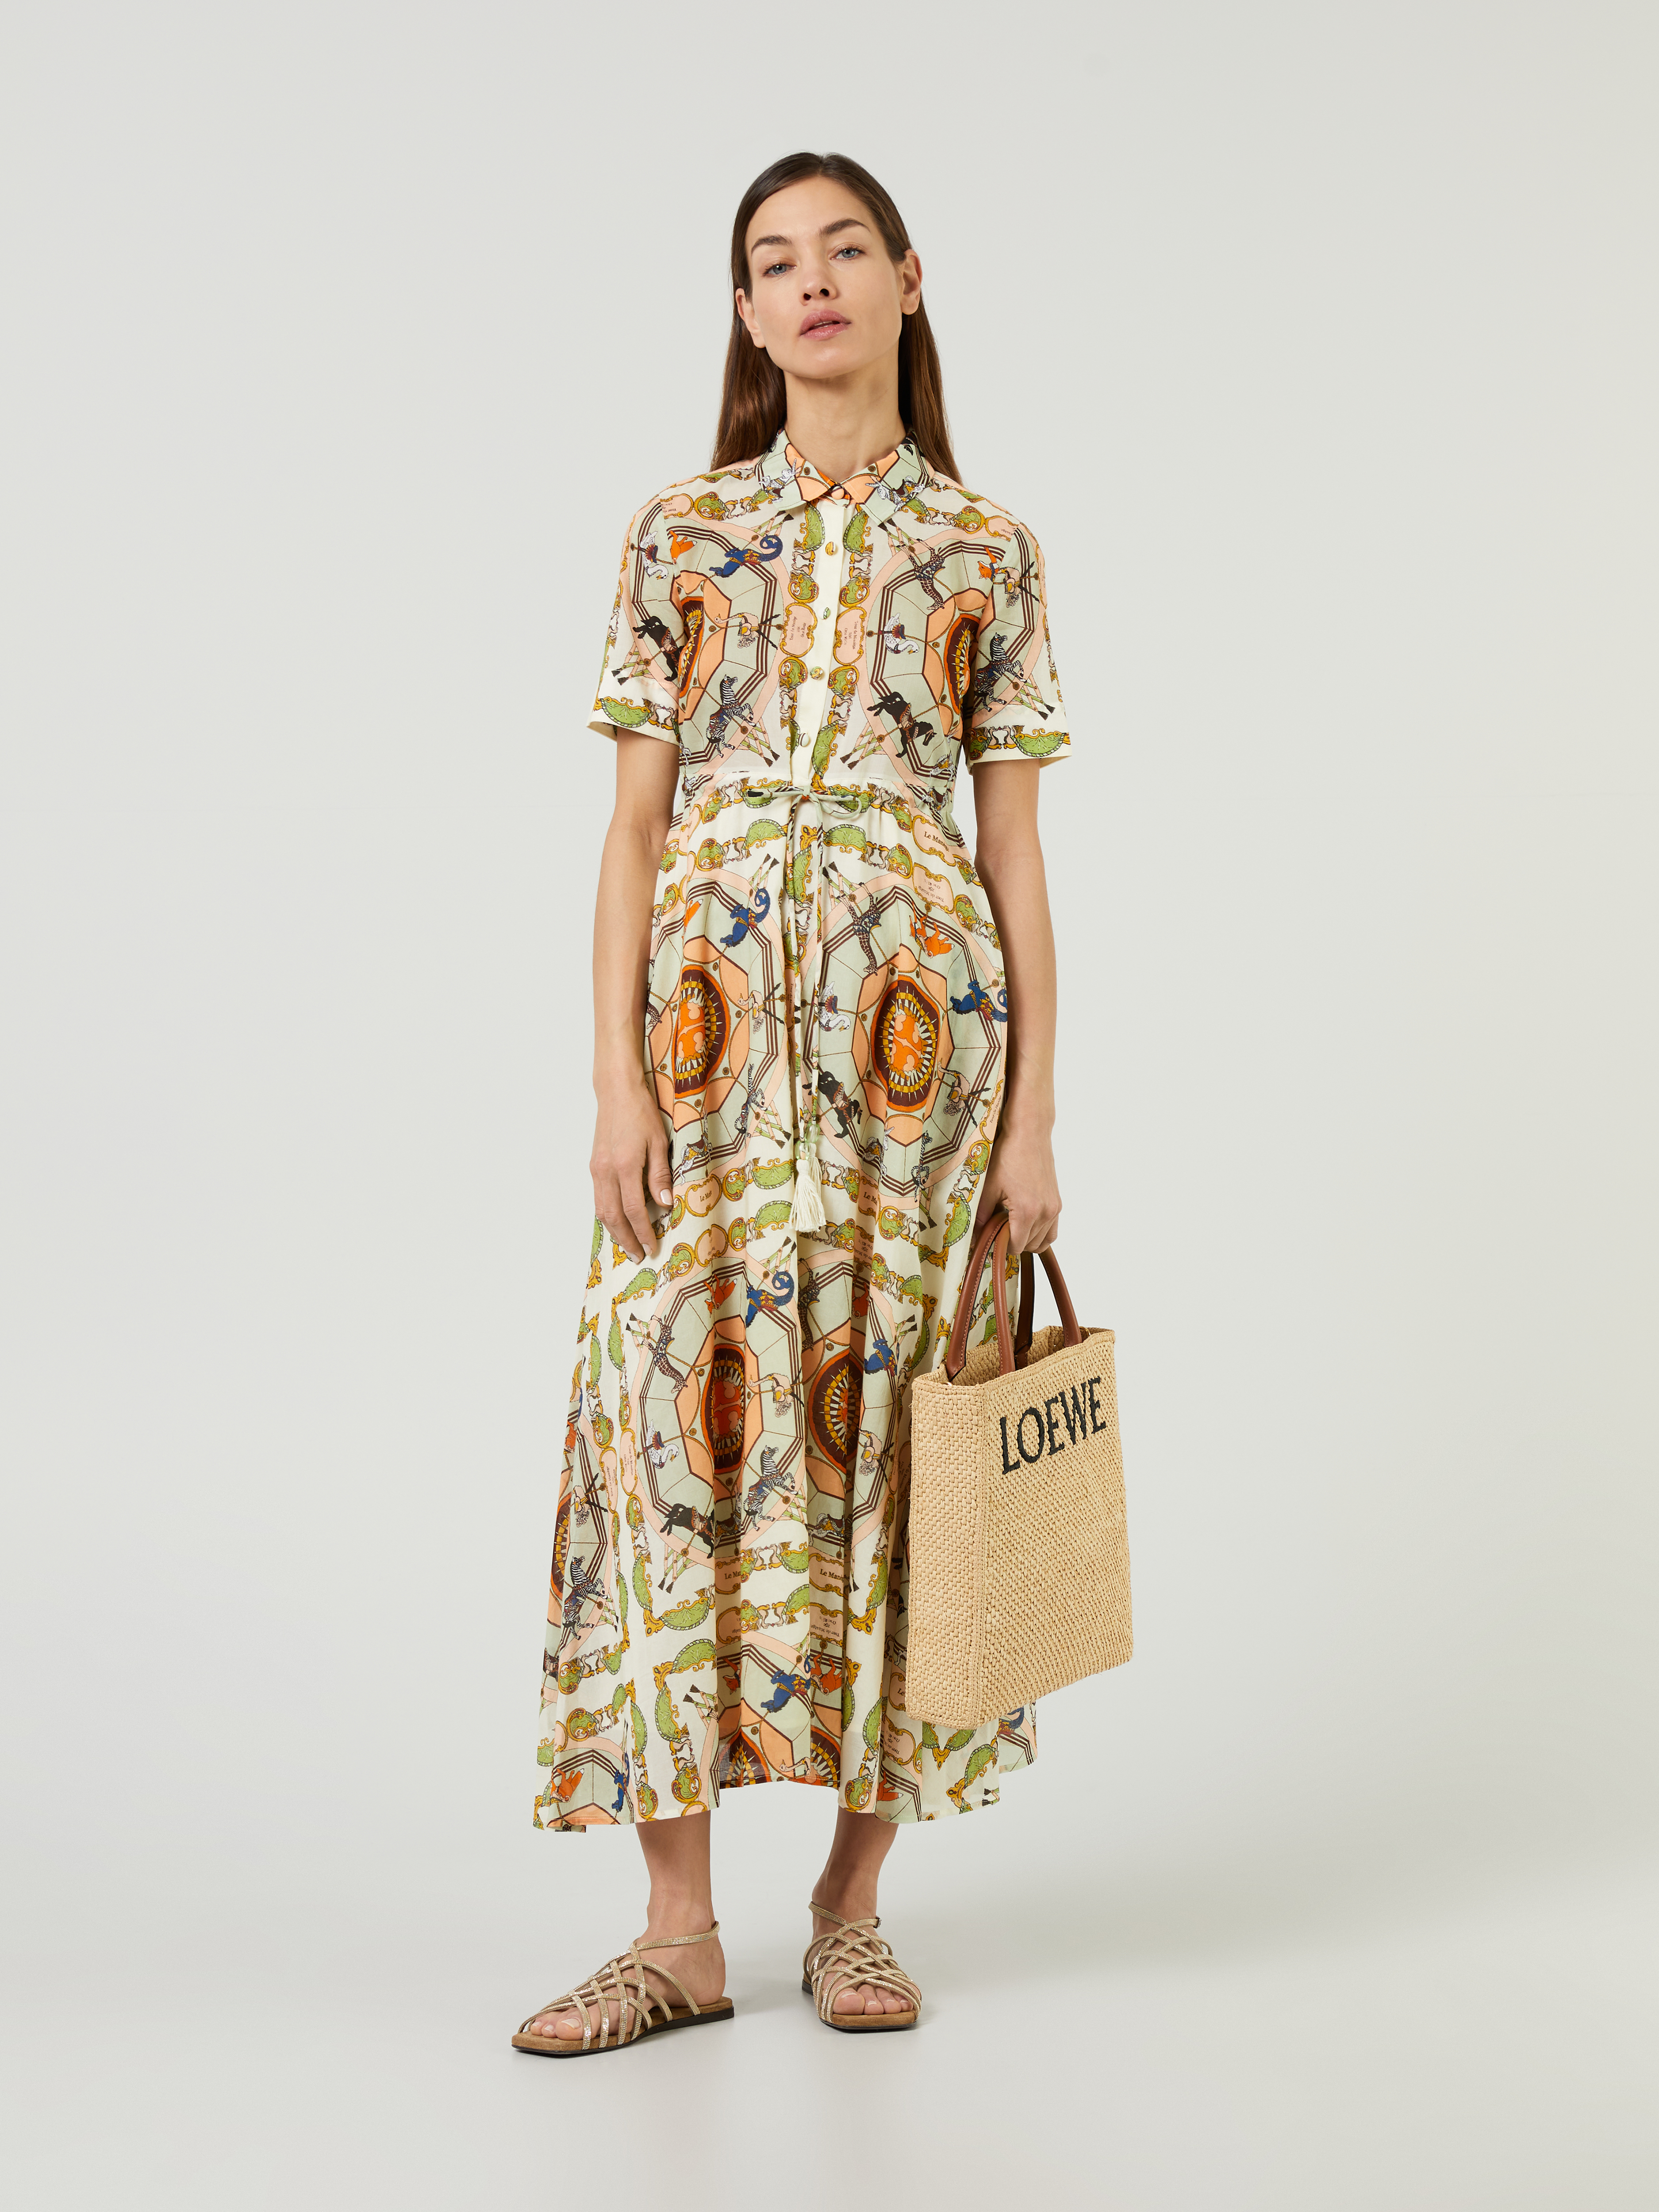 Tory Burch Printed blouse dress multi | Shirt Dresses